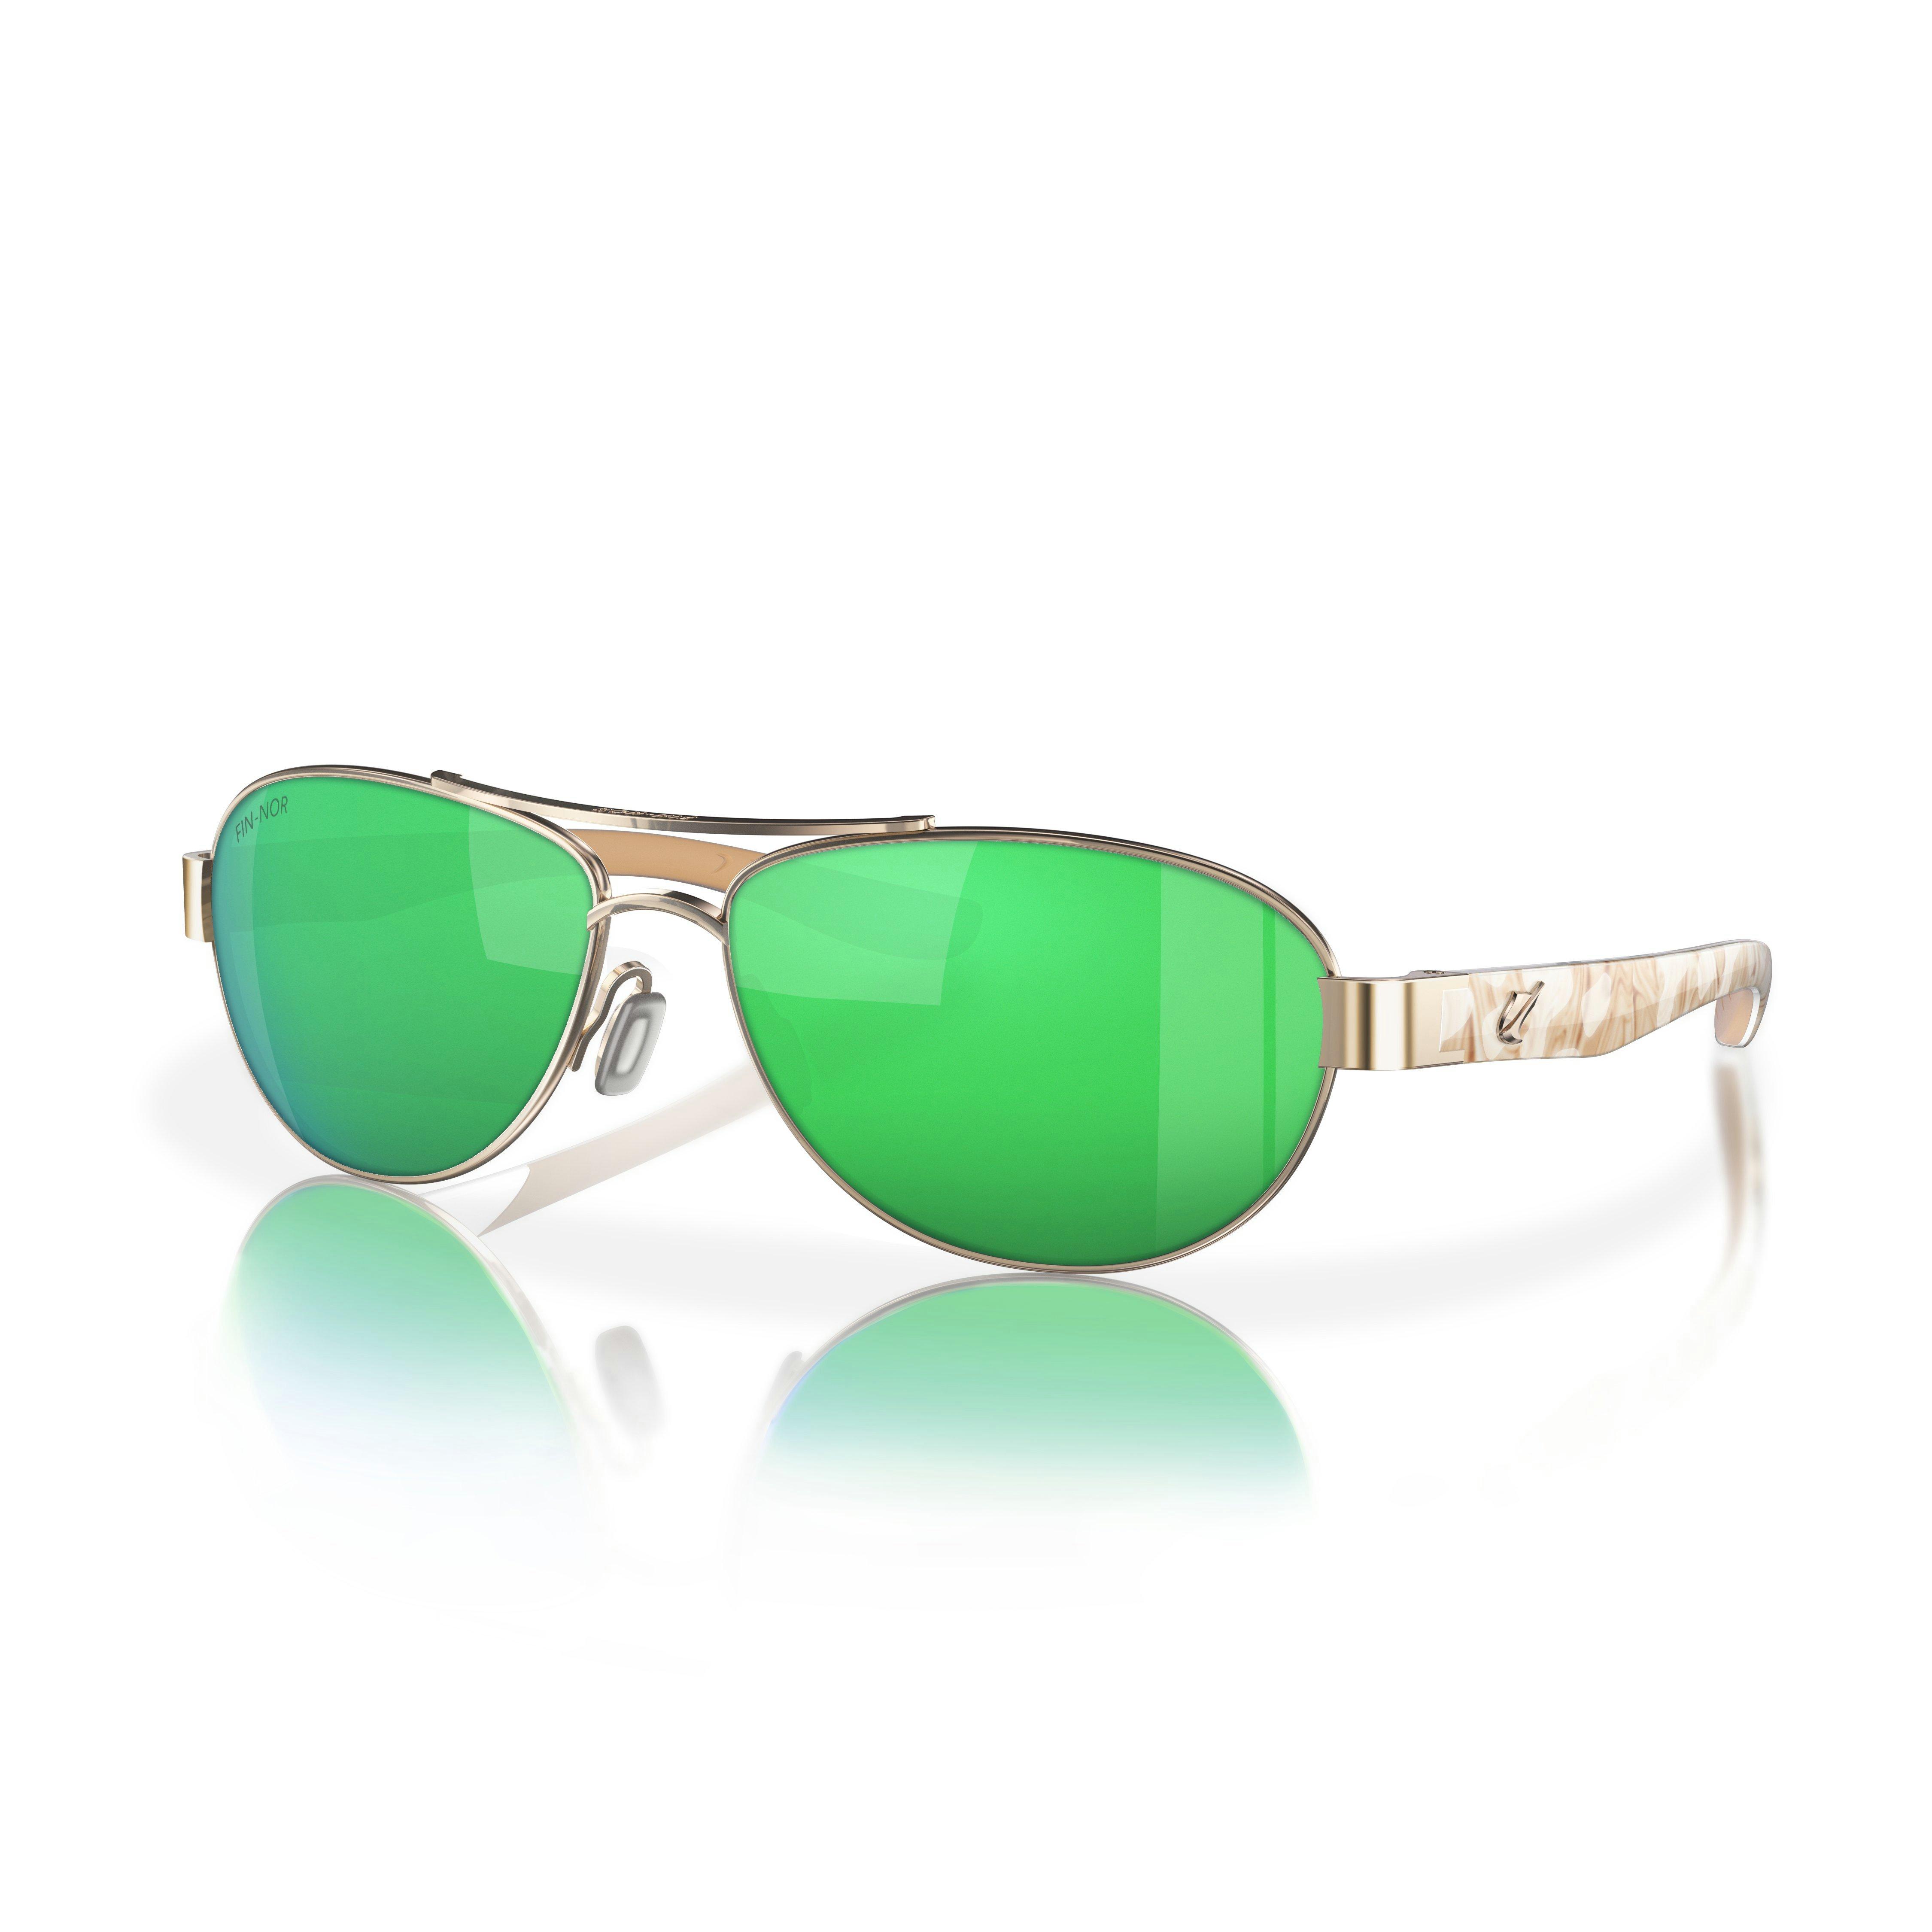 Product Spotlight: Fin-Nor Spring Tide Sunglasses - The Fisherman